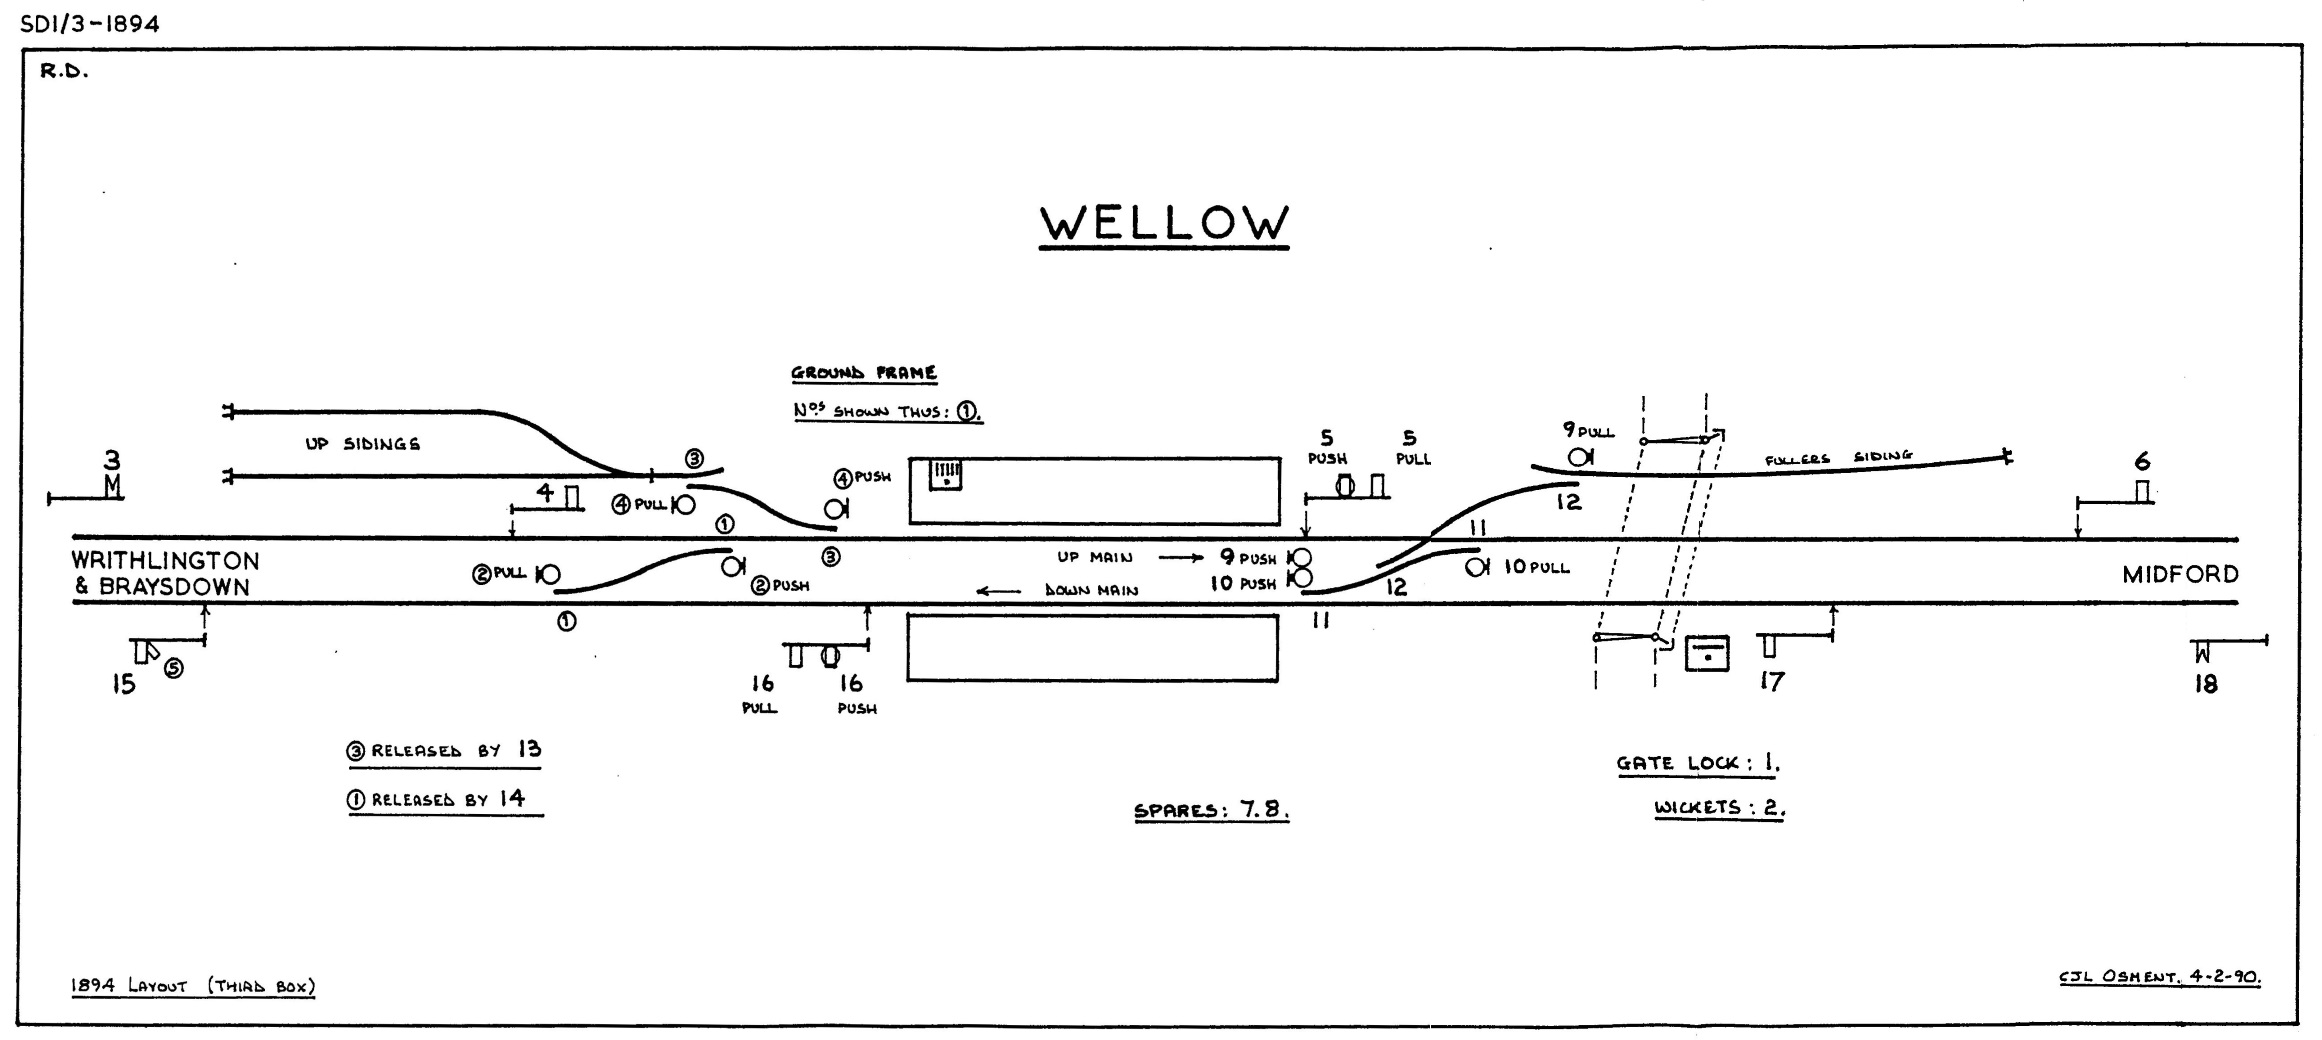 Wellow signal-box diagram 1894